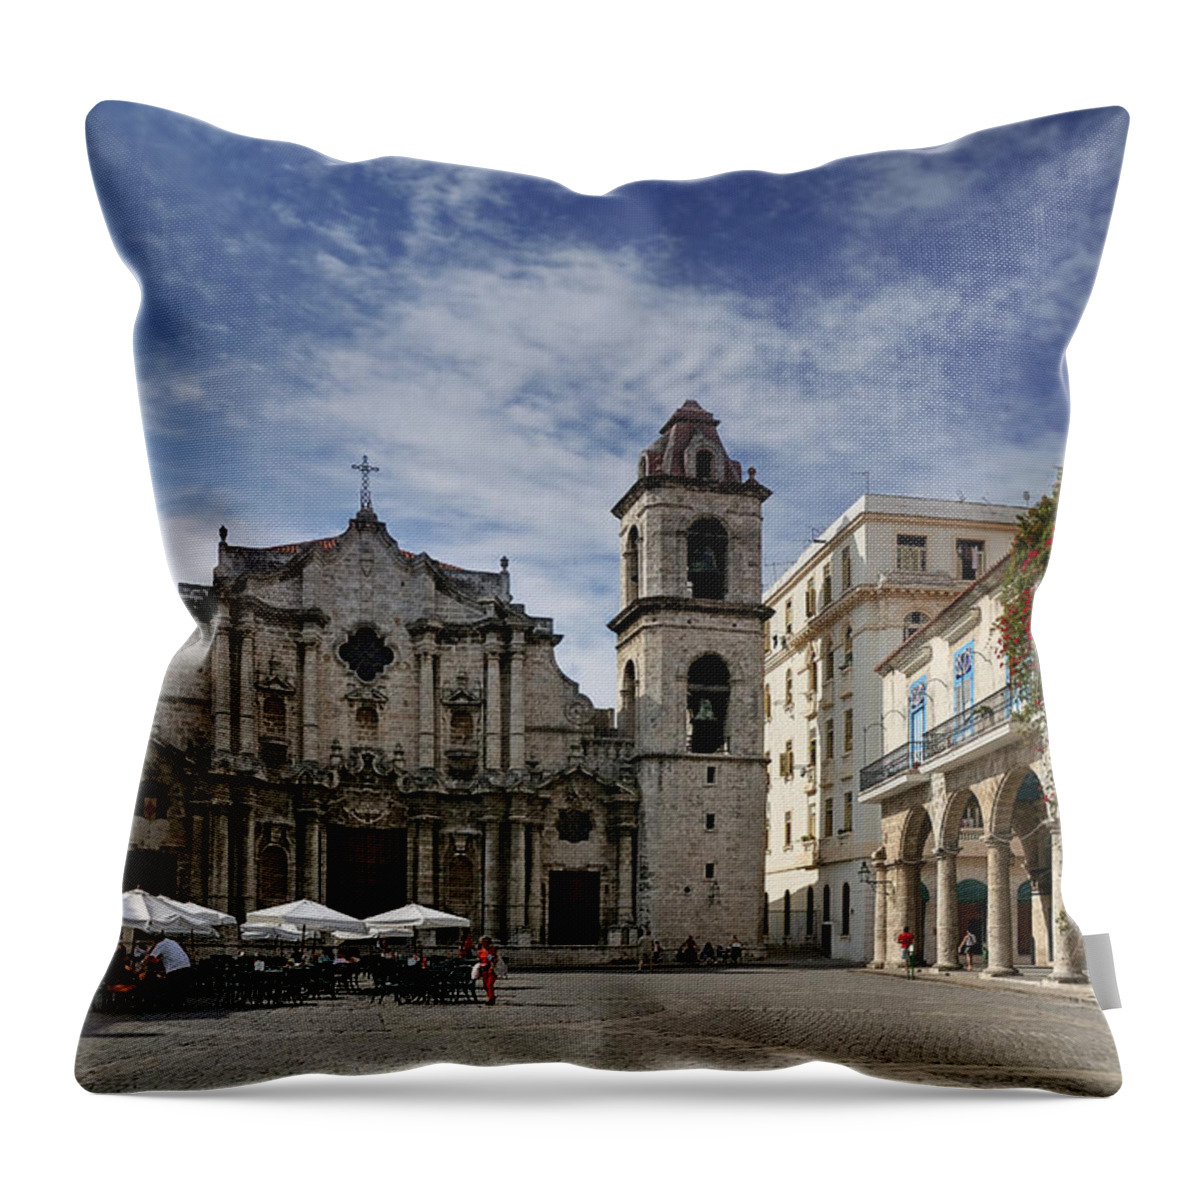 Cuba Havana Throw Pillow featuring the photograph Havana Cathedral. Cuba by Juan Carlos Ferro Duque